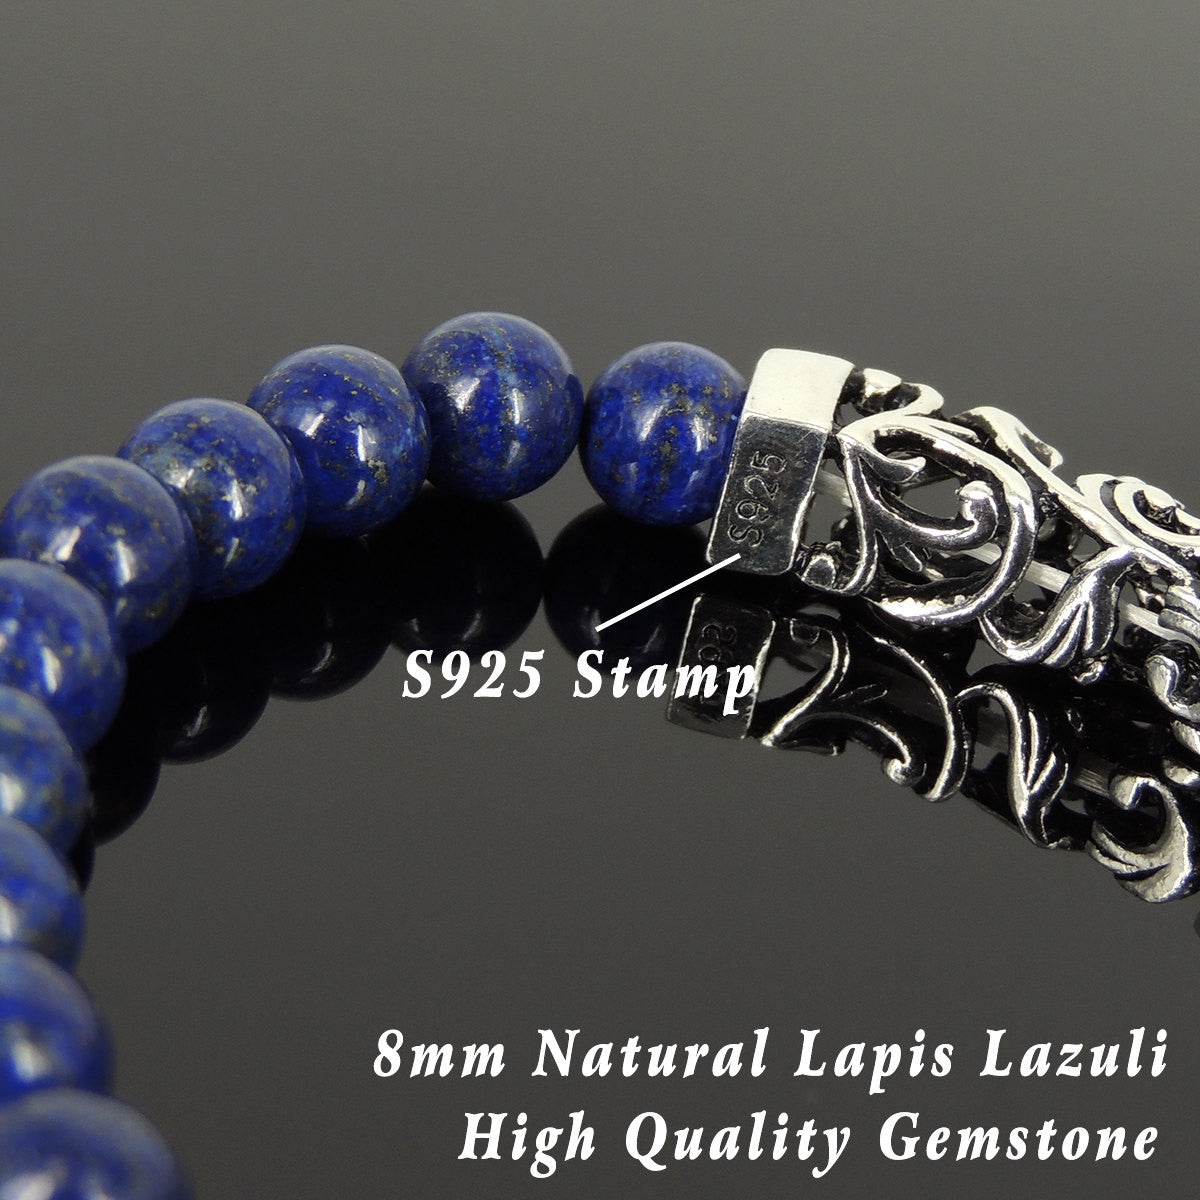 8mm Lapis Lazuli Healing Gemstone Bracelet with S925 Sterling Silver Ornate Floral Celtic Charm - Handmade by Gem & Silver BR268